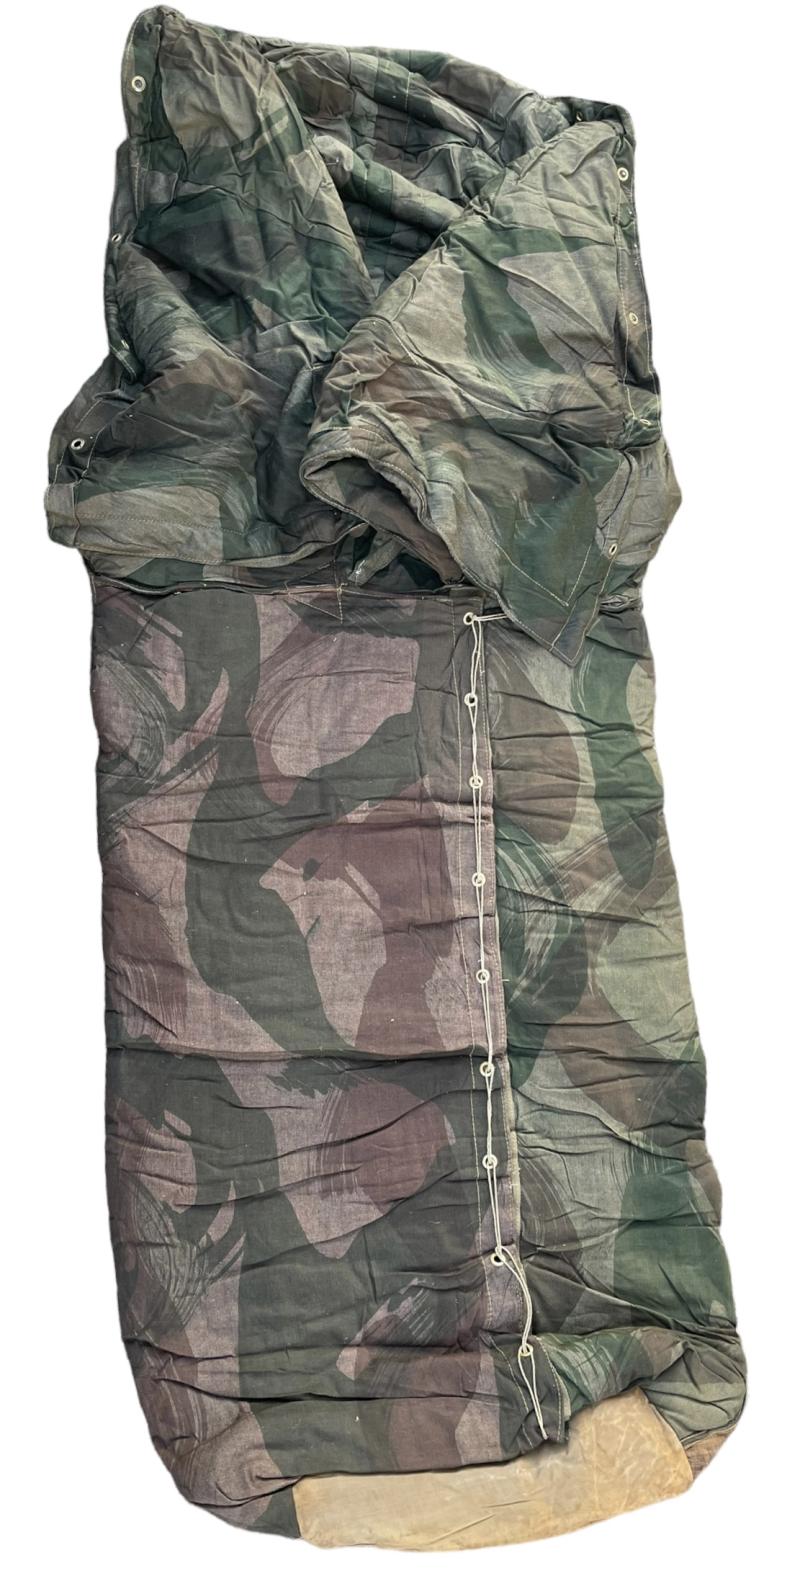 British WW2 Airborne camo Sleeping Bag